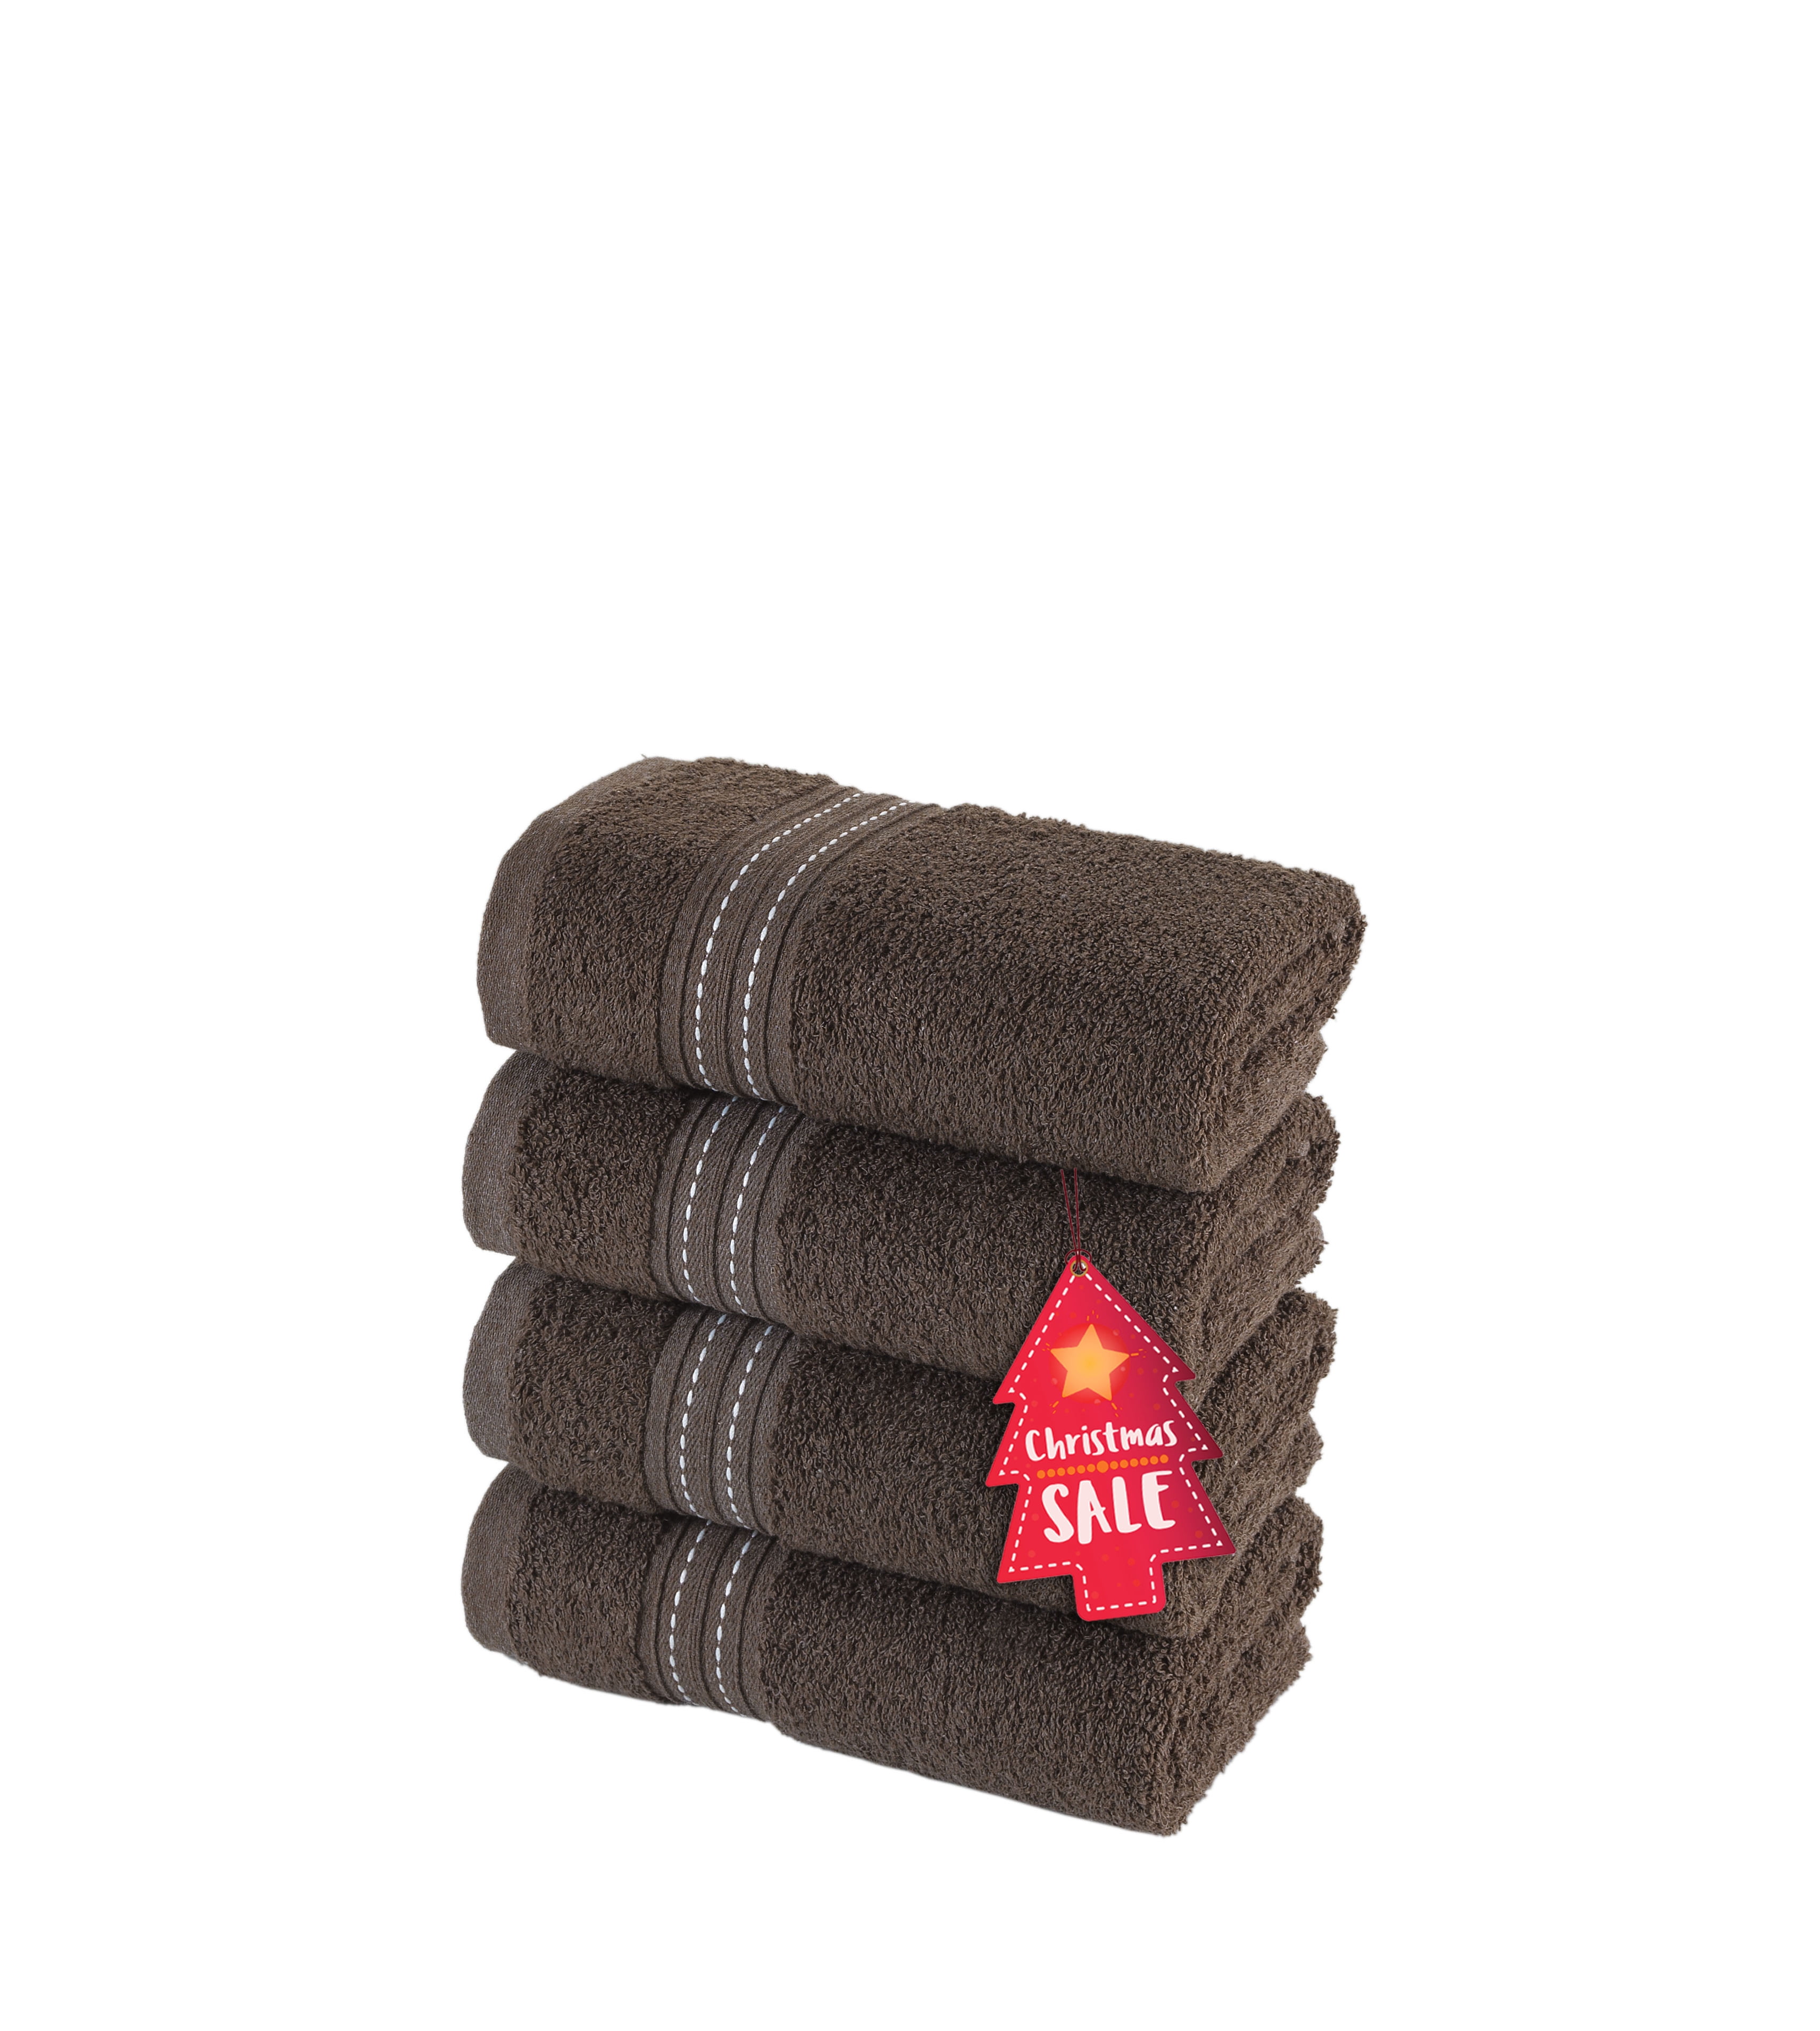 HALLEY 100% Turkish Cotton Washcloths for Body, Face, Bathroom, Hotel, Spa  & Kitchen - Super Soft & Highly Absorbent Fingertip Towels - Luxury Wash